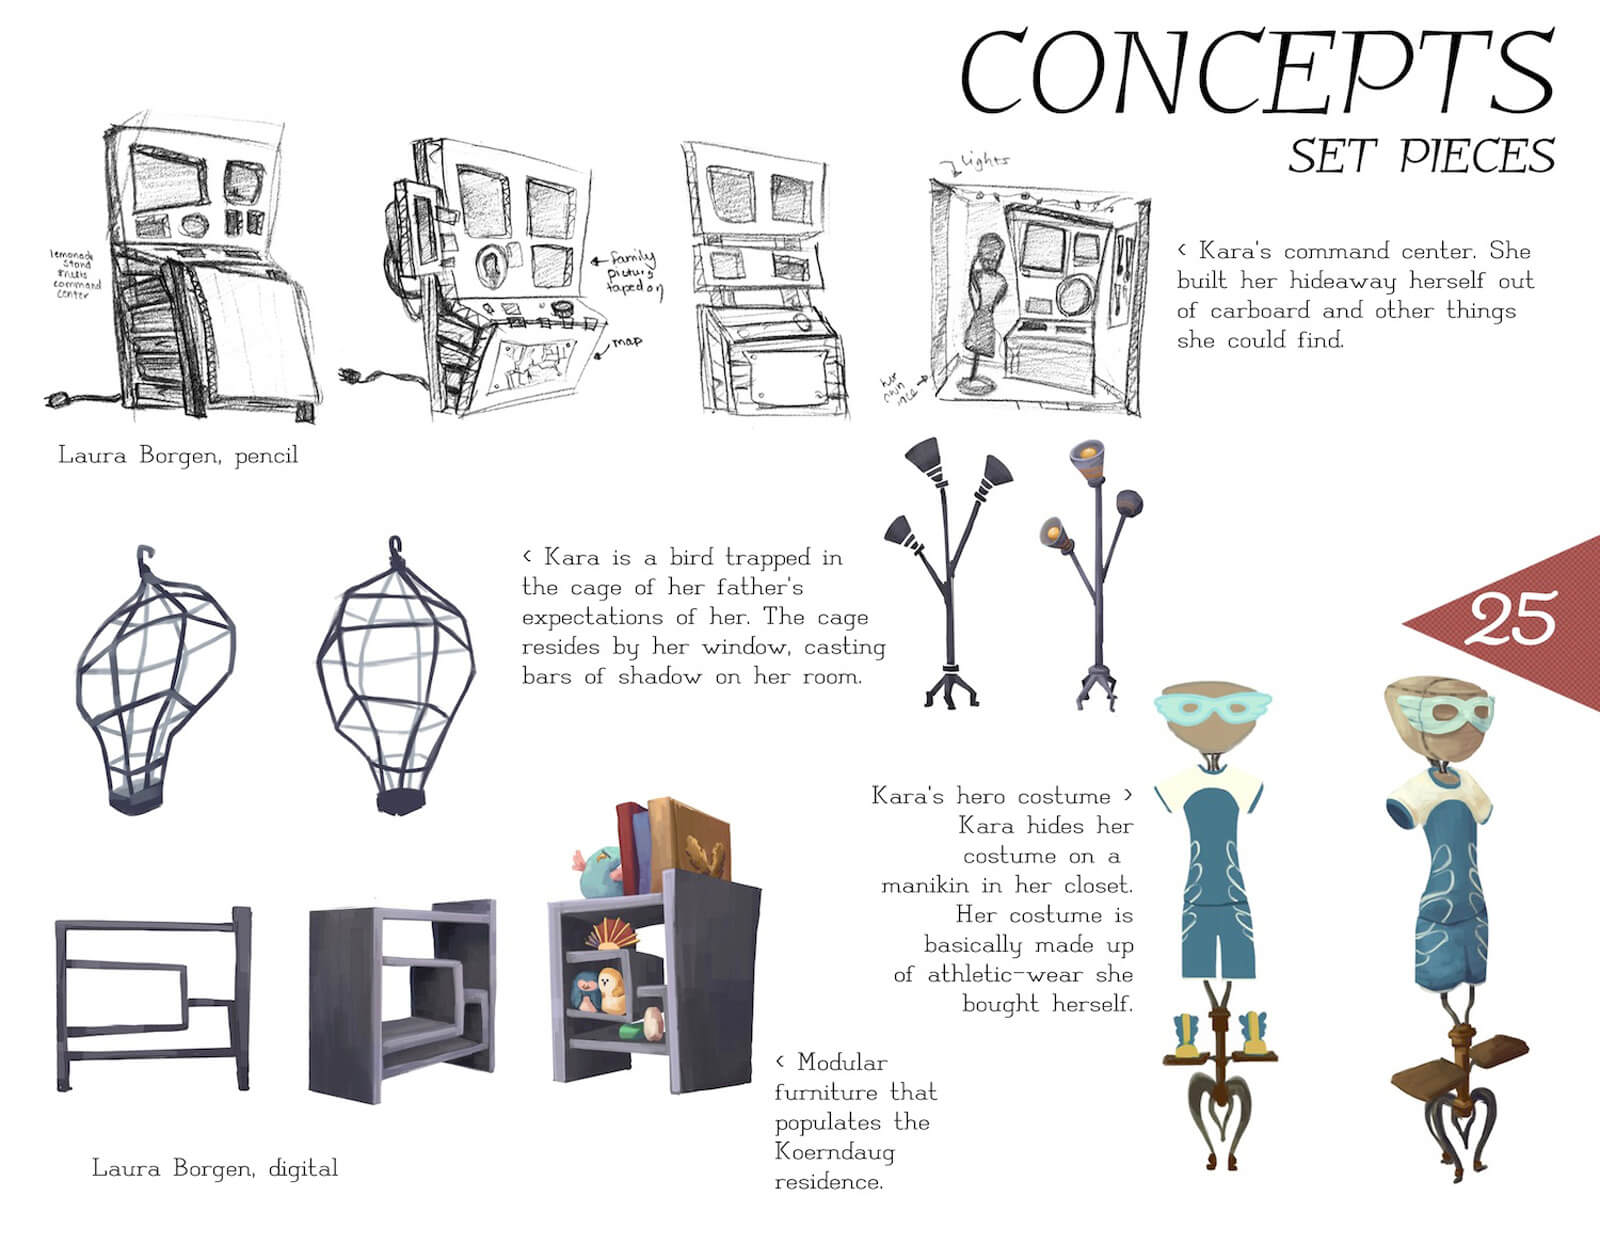 Concept art of set pieces in the film Super Secret, including command centers, lamps, shelves, and mannequin